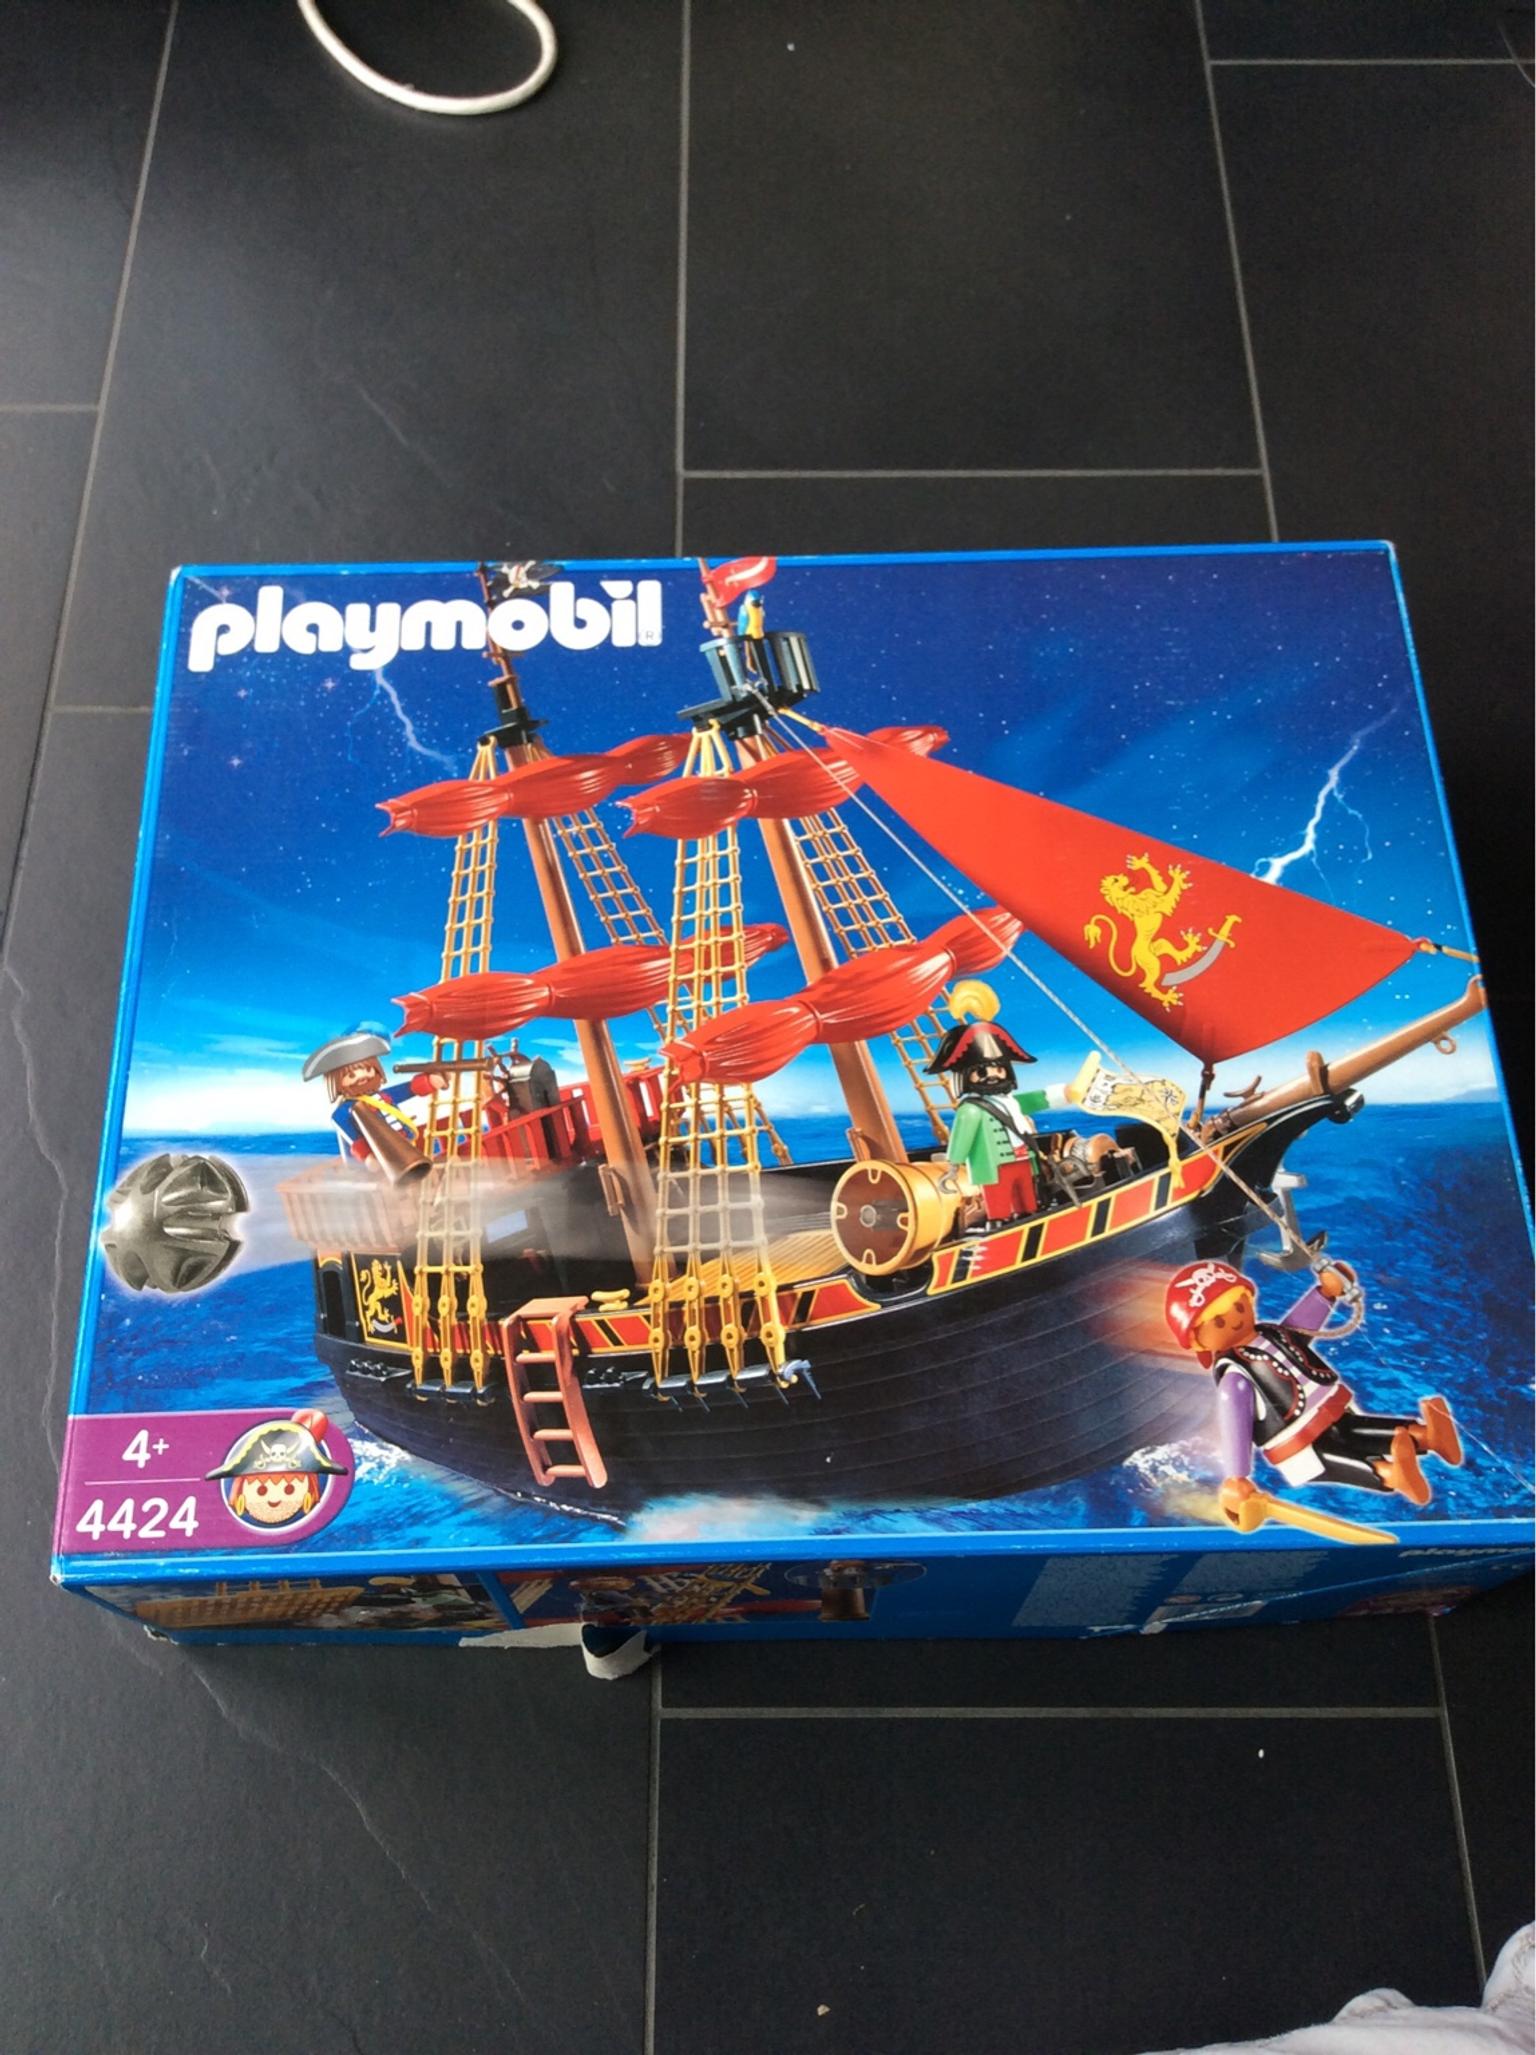 Piraten mit Boot Waffen Figuren Zbh z Piratenschiff 3940 5736 4424 Playmobil 002 